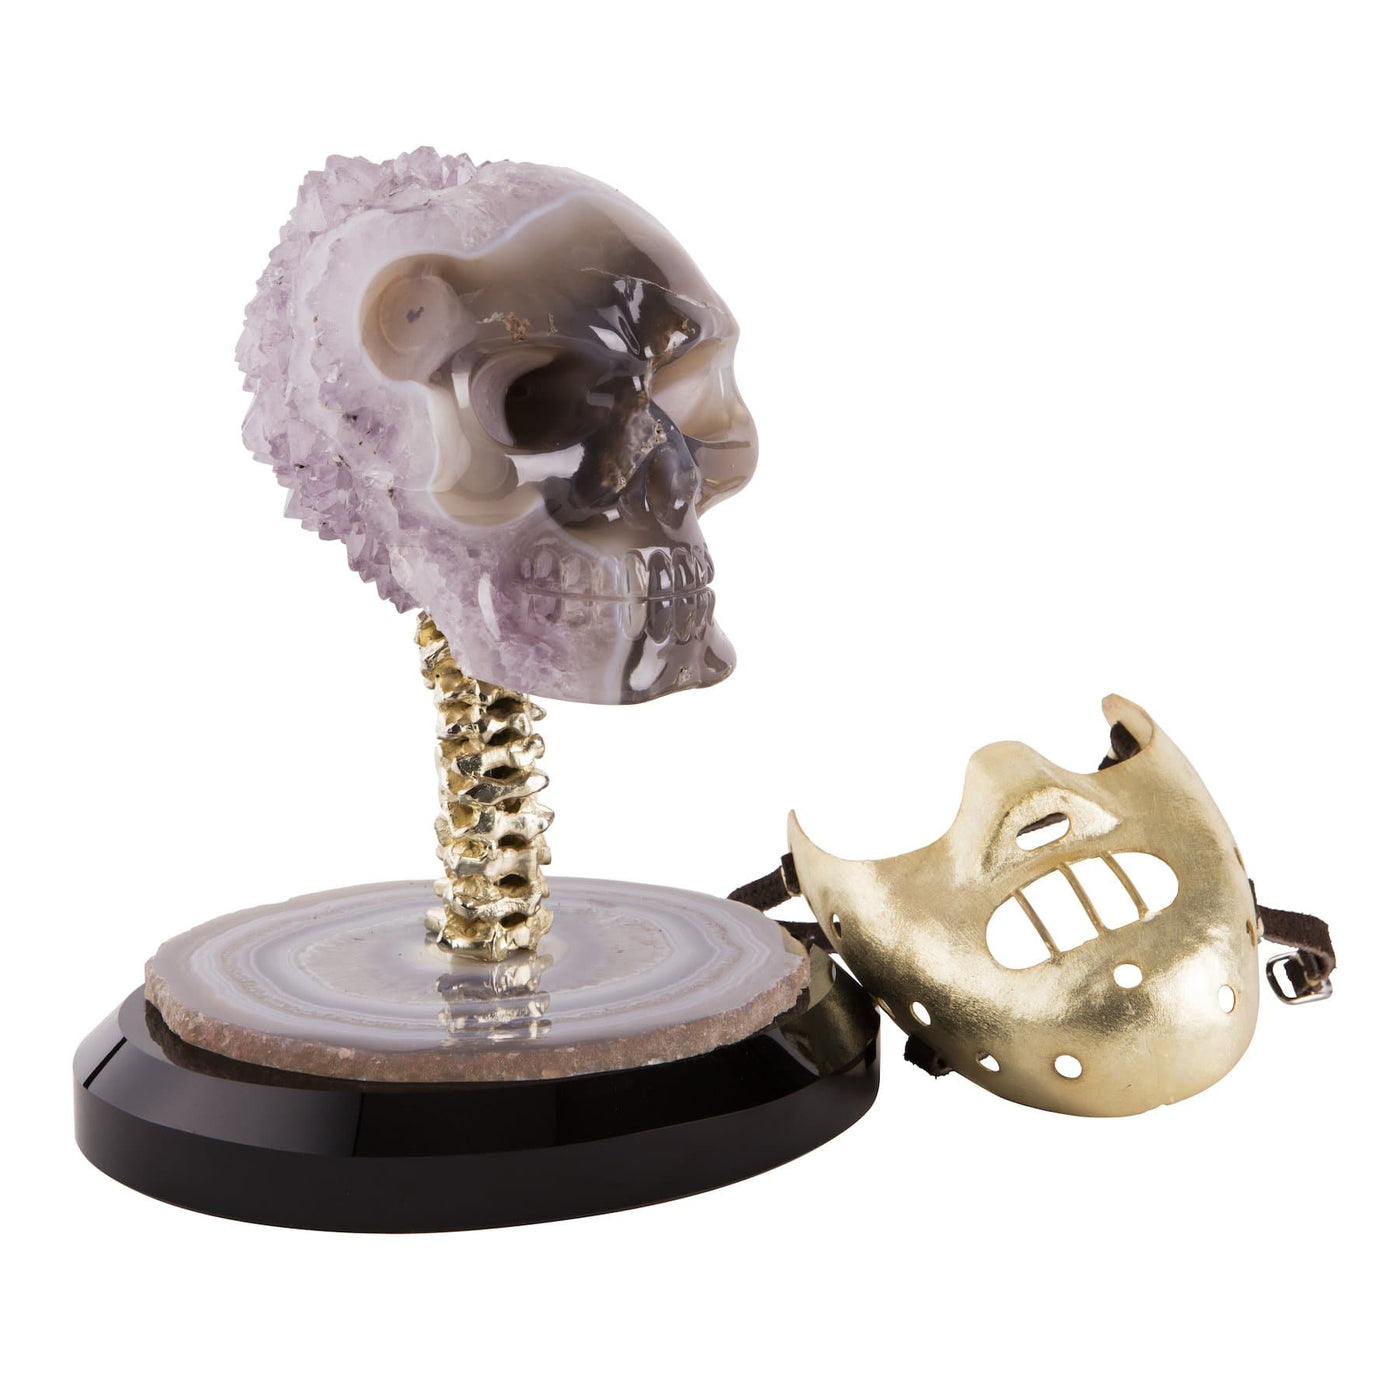 Fine Art Sculpture "Lecter Skull" - Surround Art & Diamonds Sculpture by L'Aquart